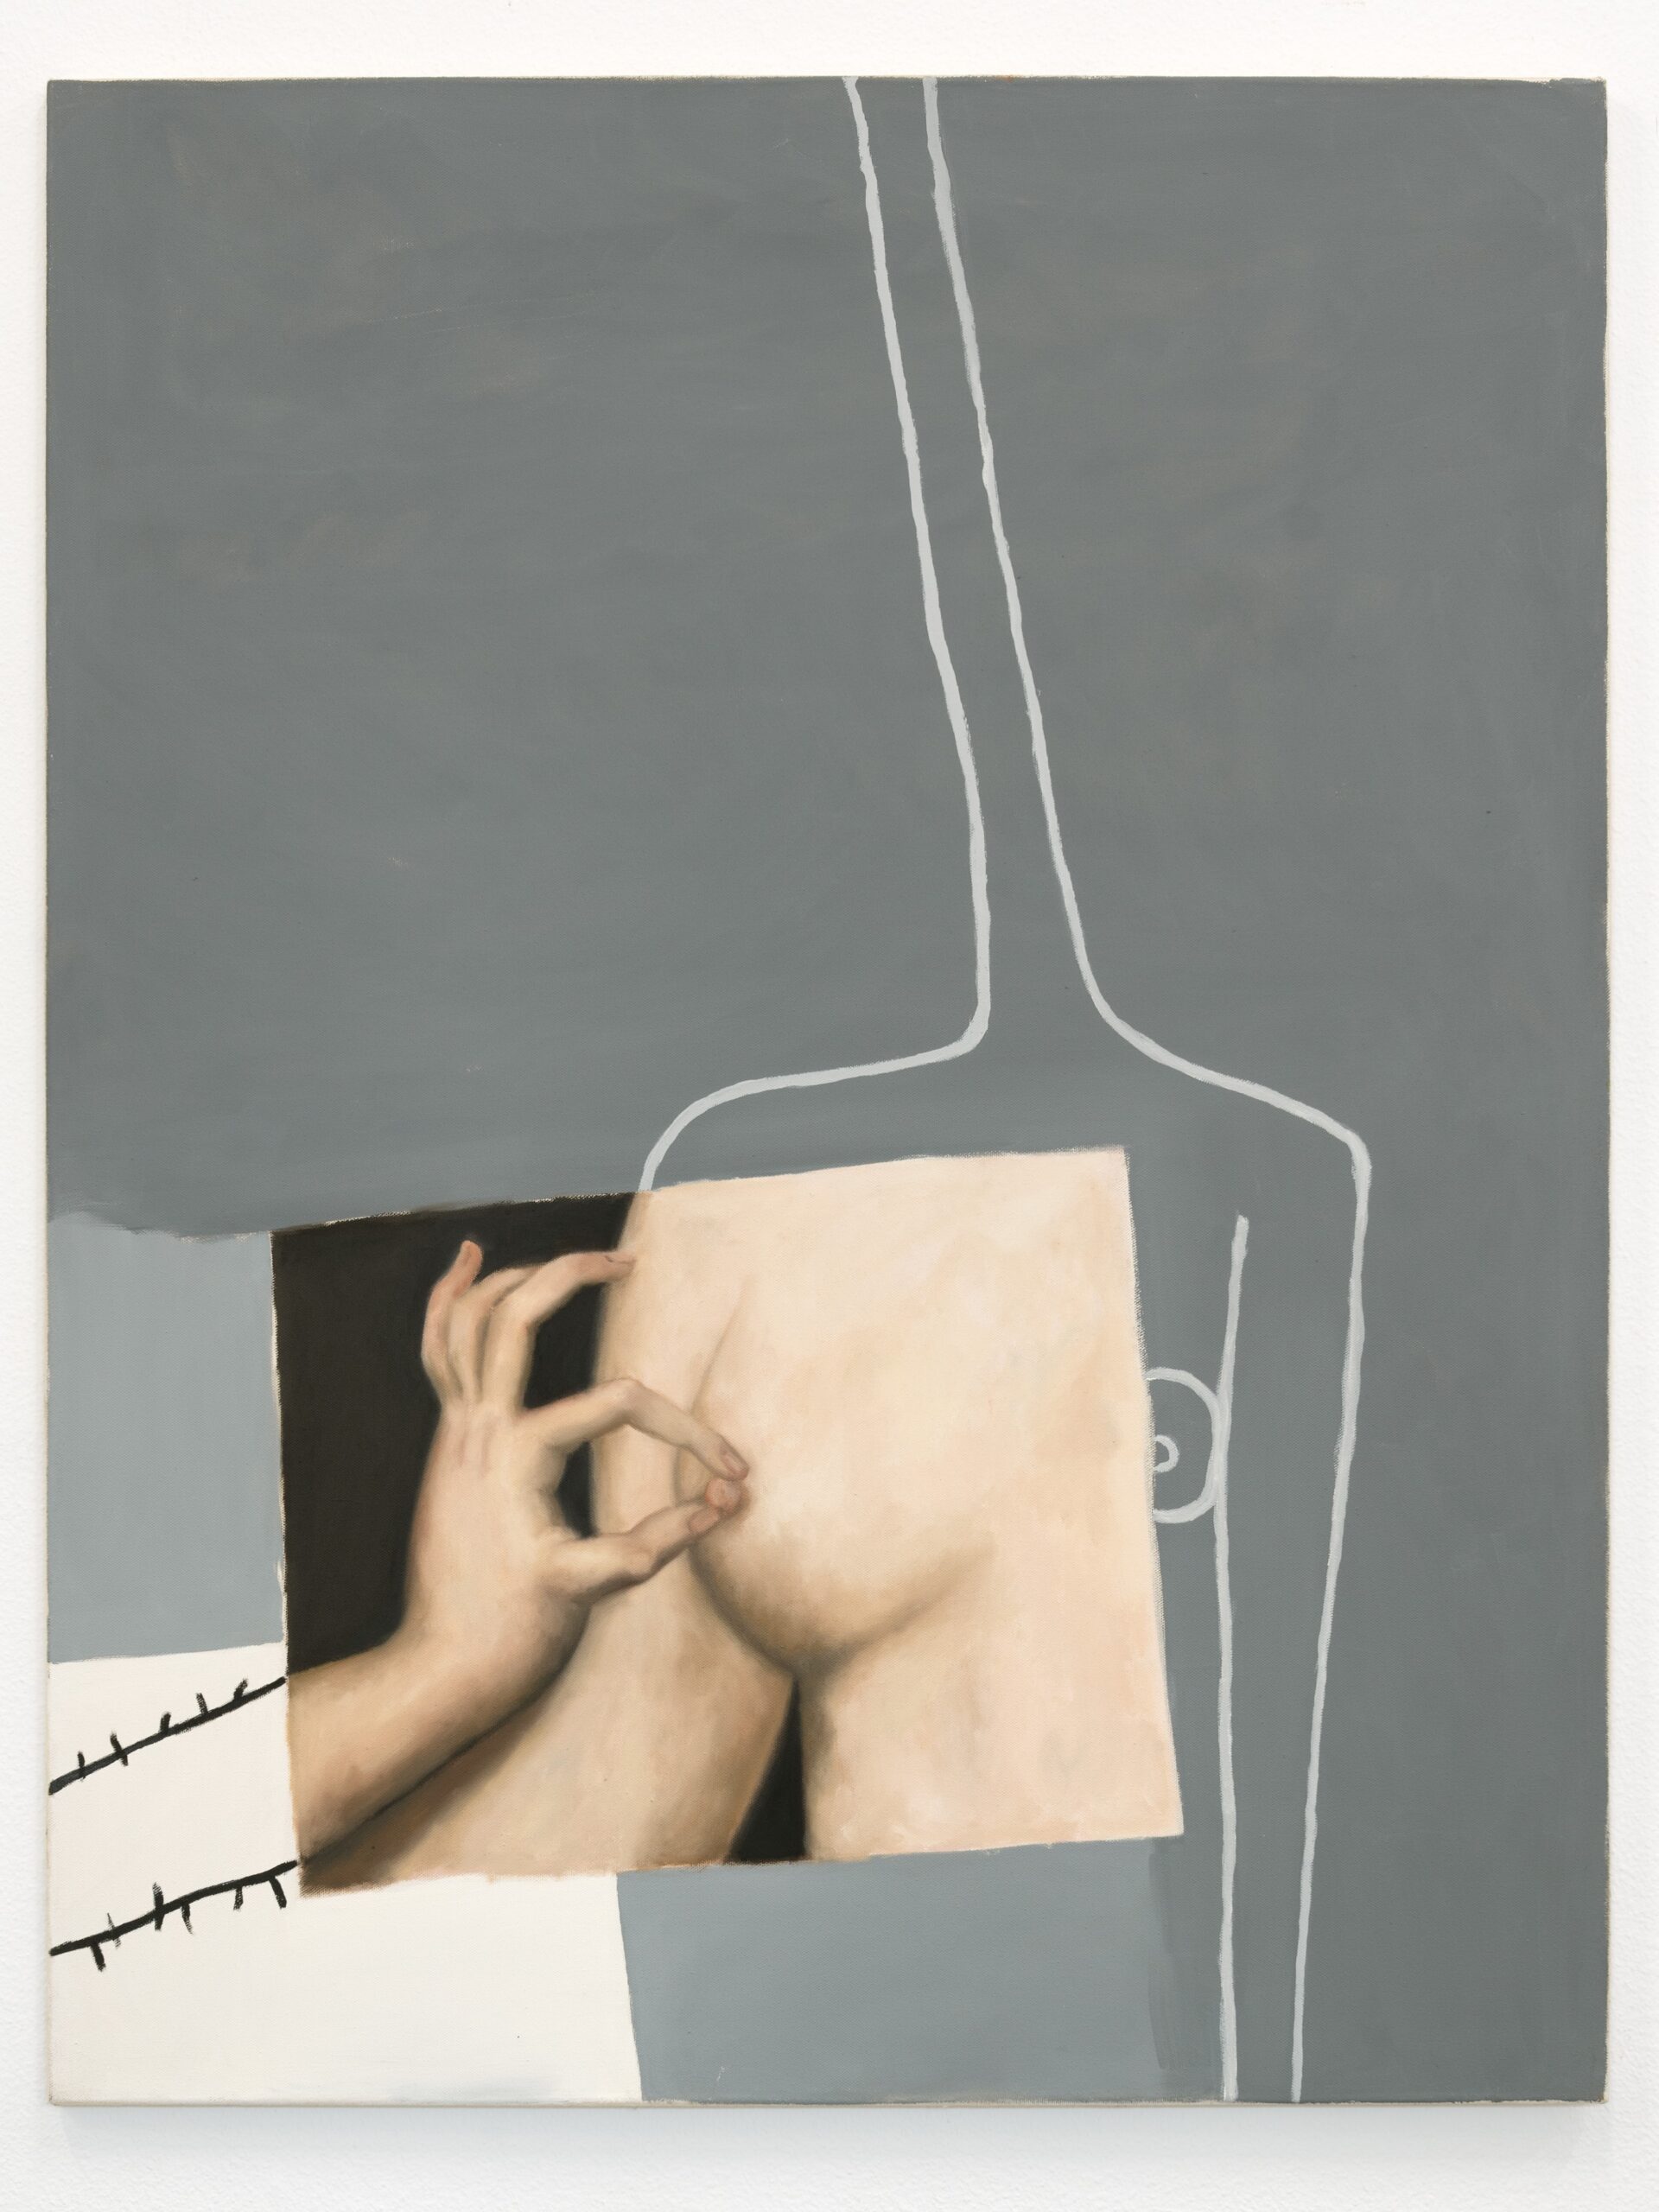 Heinrichs Träume, 2019, oil on canvas, 130cm x 100cm 